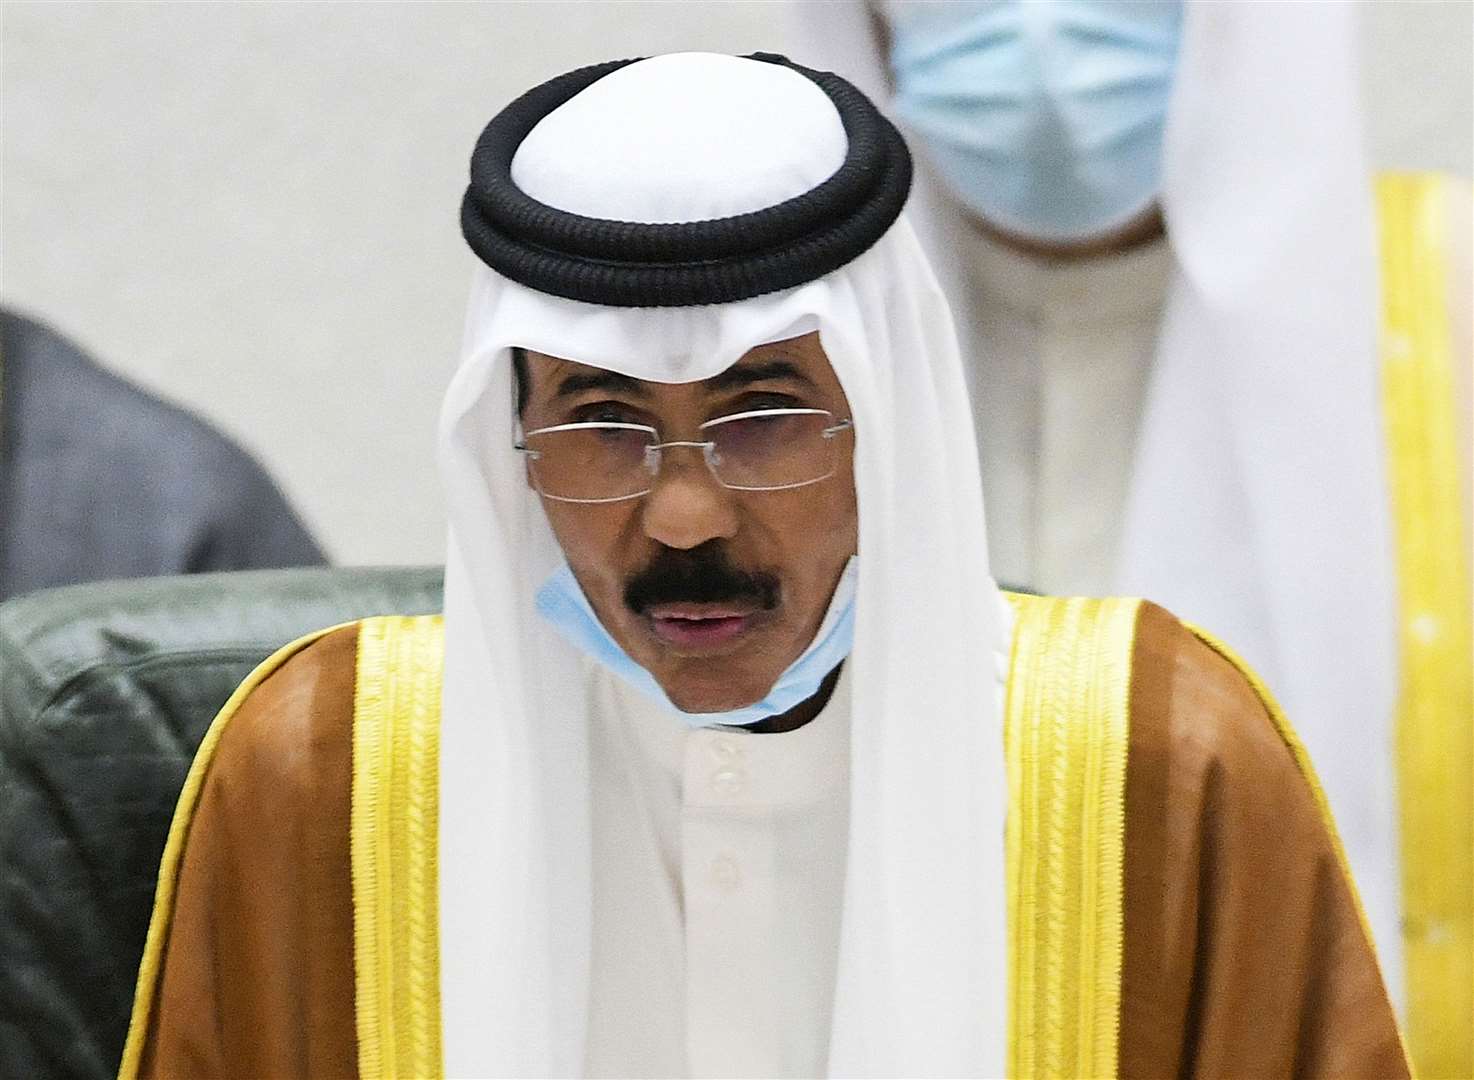 The former emir of Kuwait Sheikh Nawaf Al Ahmad Al Sabah (Jaber Abdulkhaleg/AP)